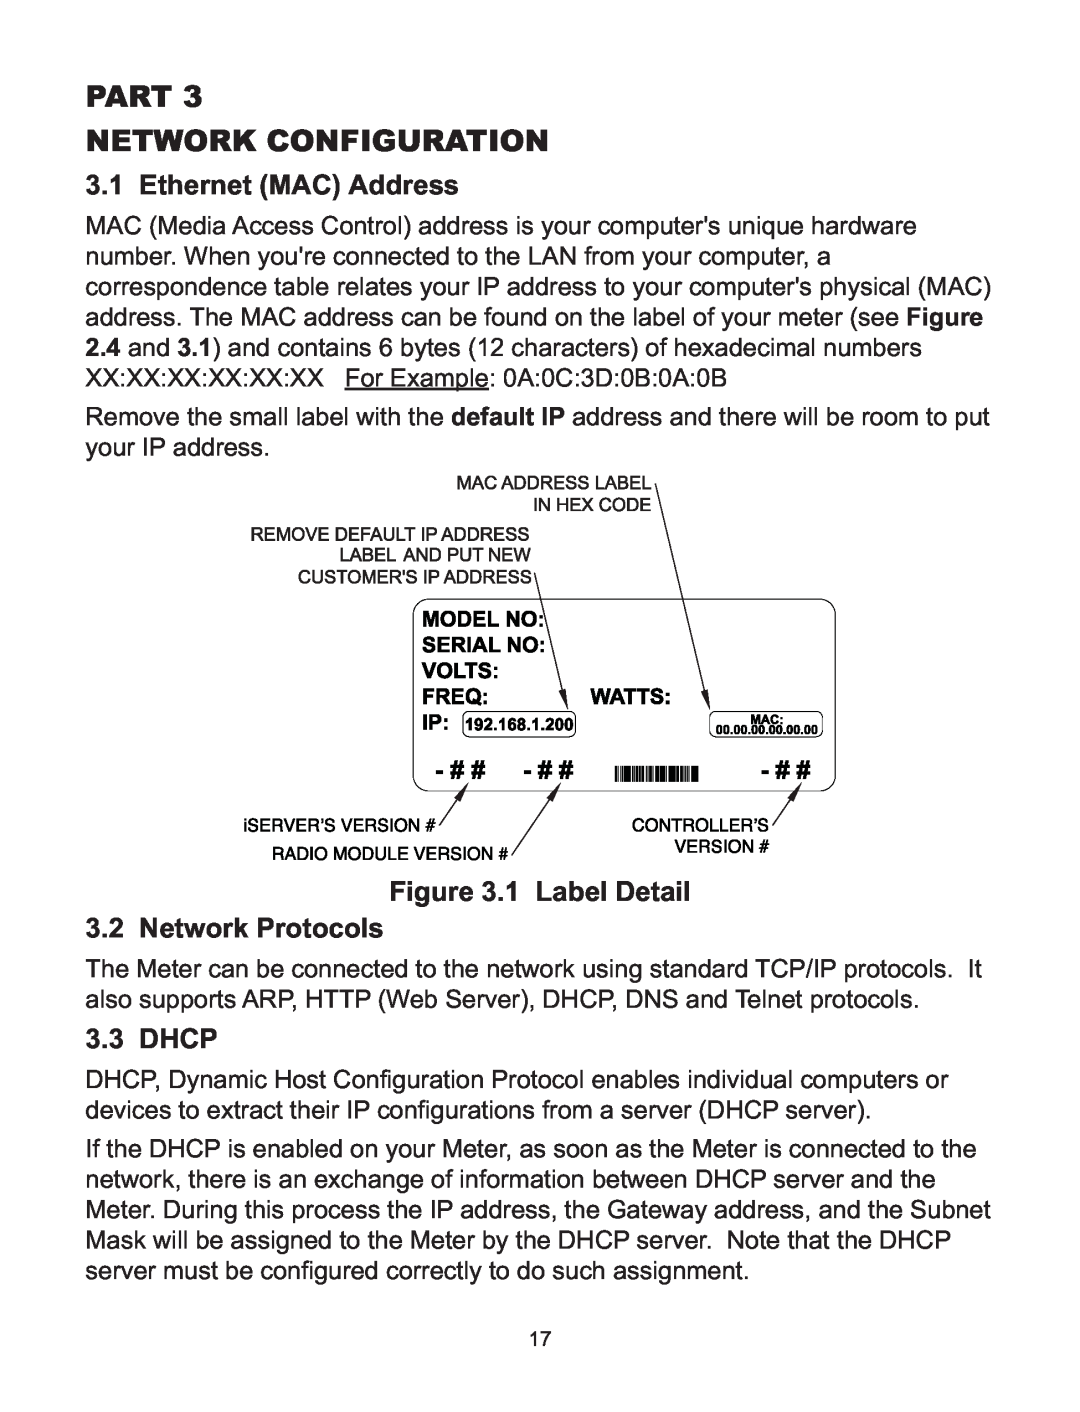 Omega WI8XX-U manual Part Network Configuration, Ethernet MAC Address, Network Protocols .1 Label Detail, Dhcp 